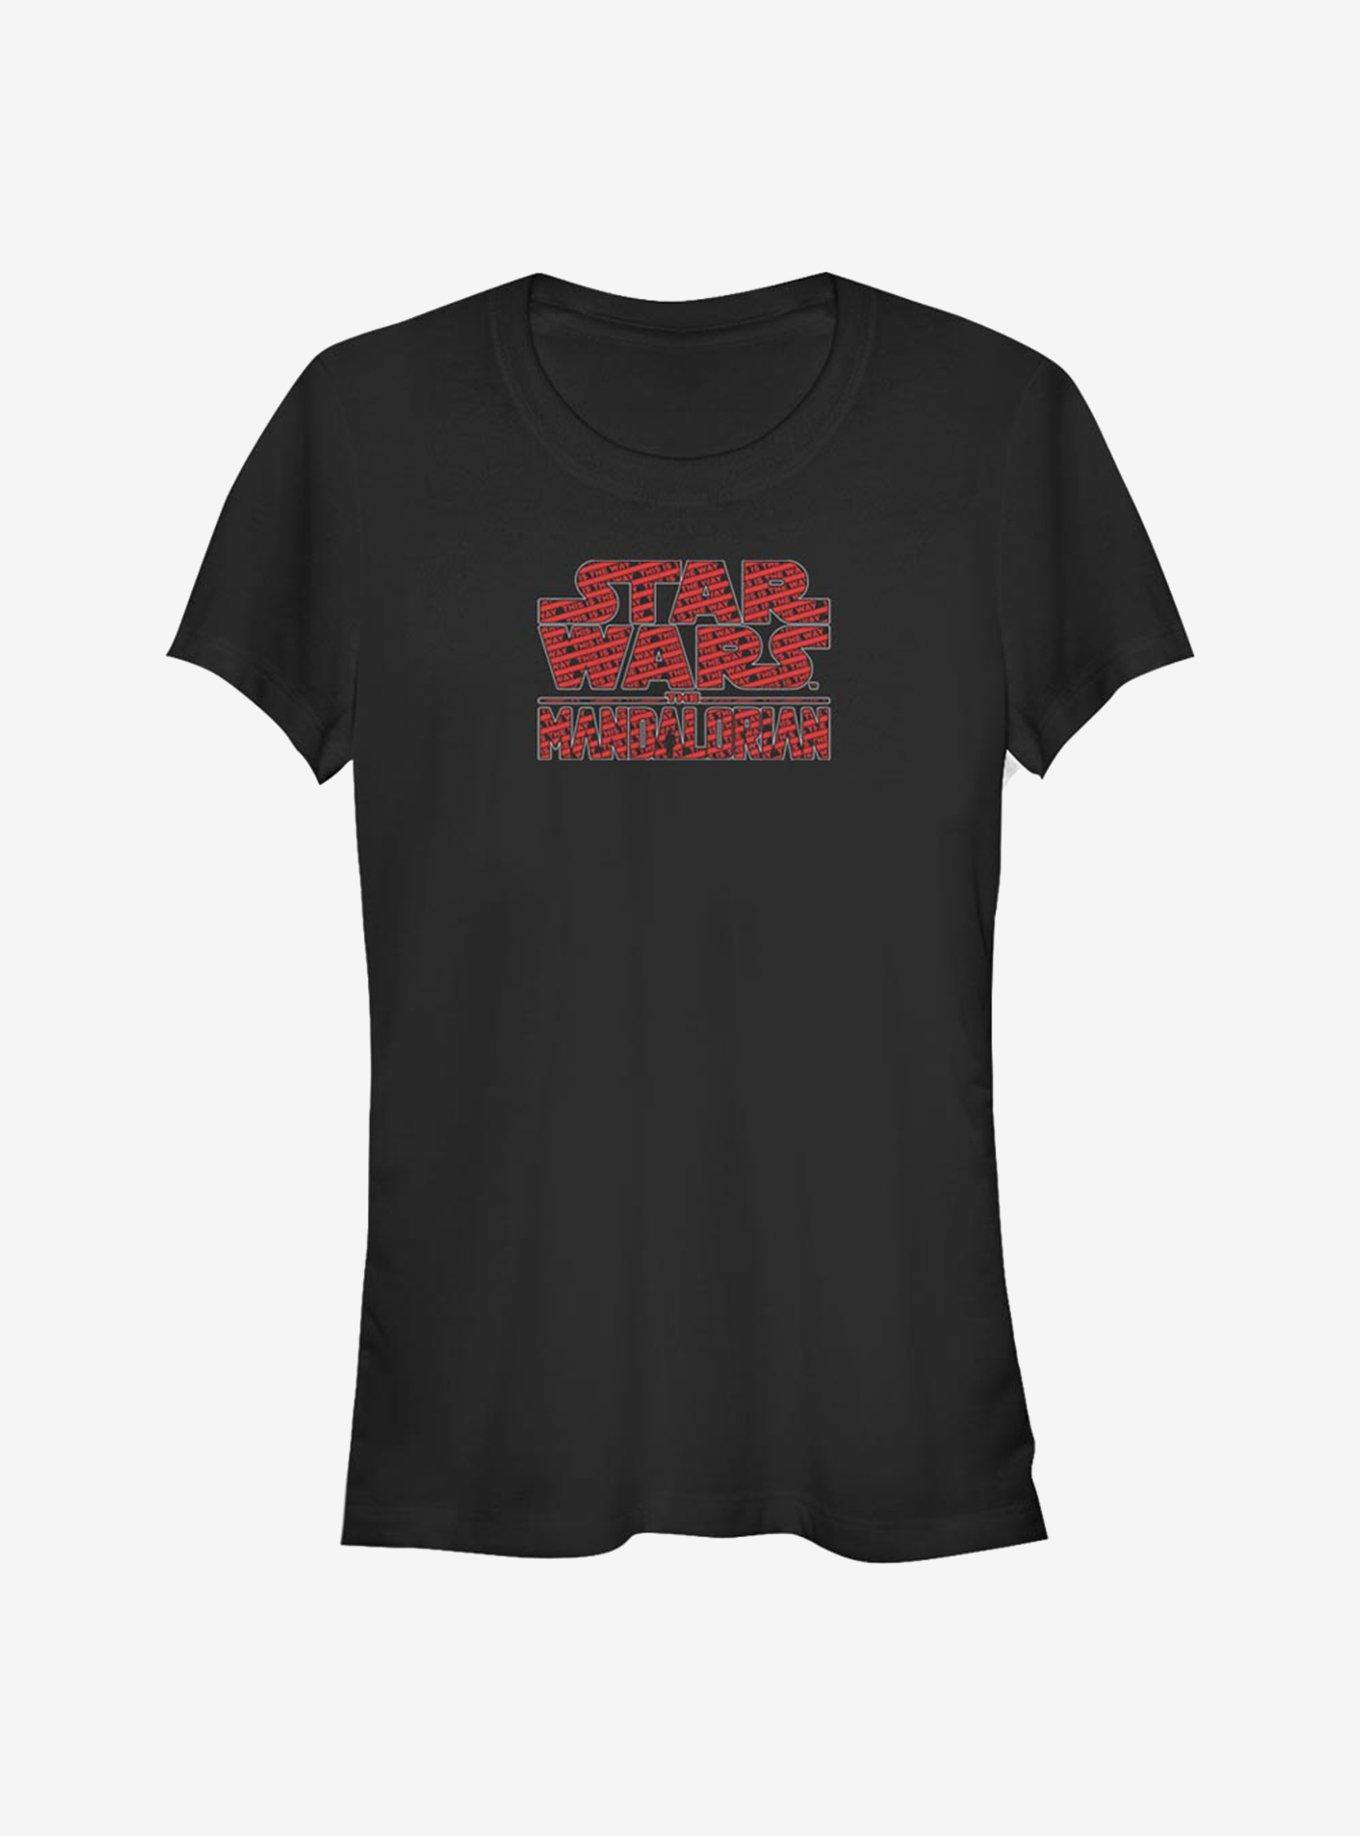 Star Wars The Mandalorian Way Logo Girls T-Shirt